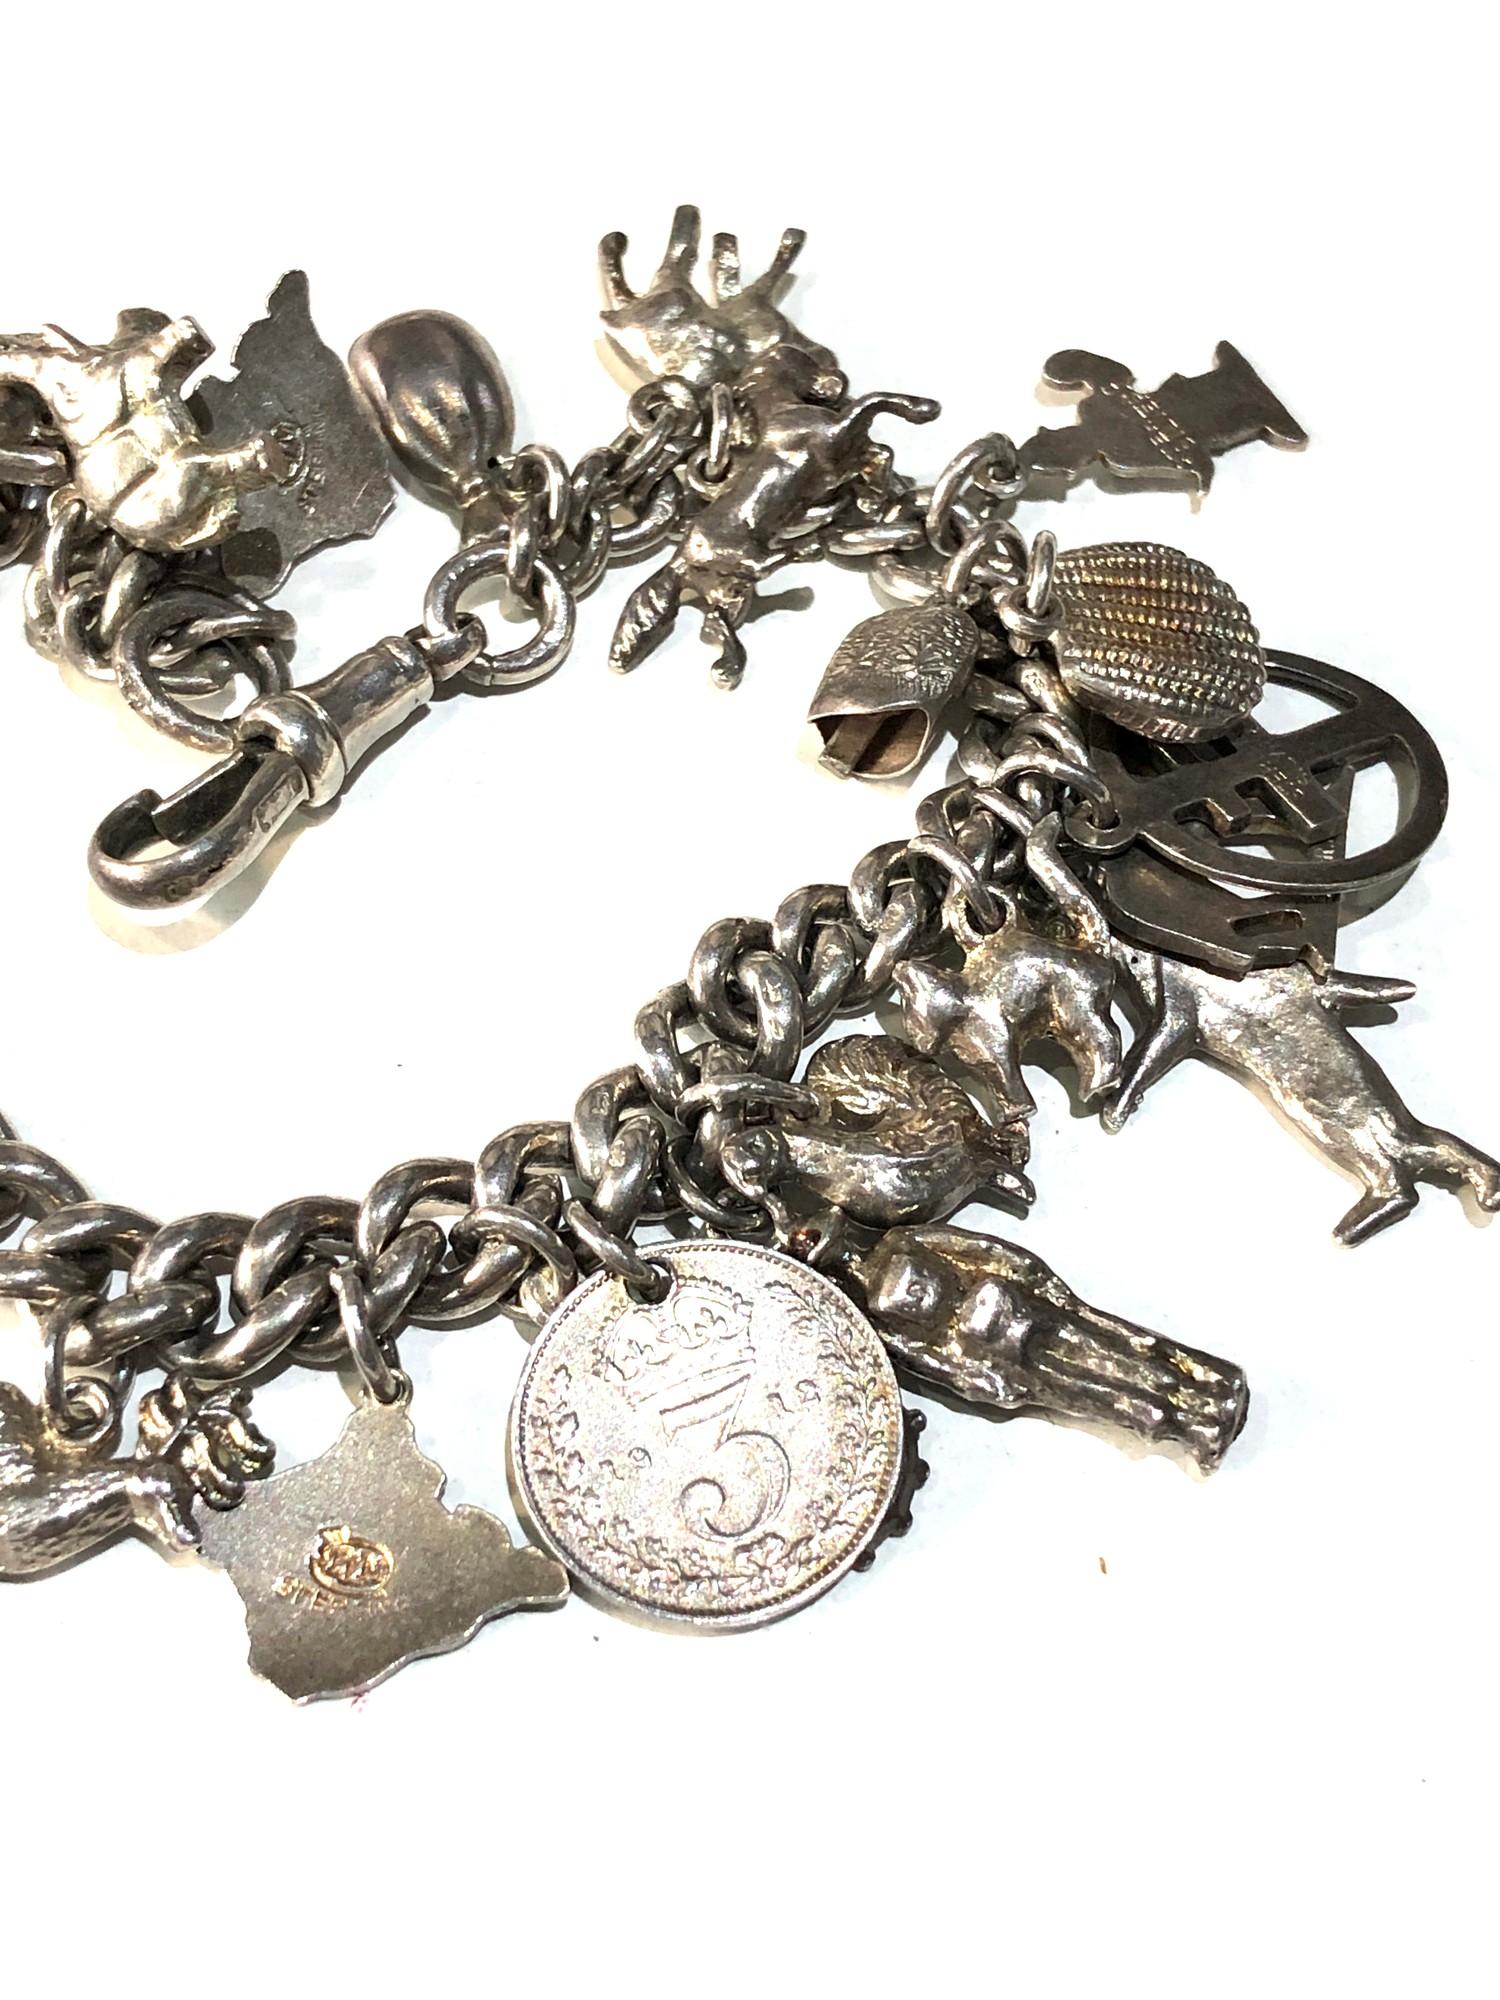 Vintage silver charm bracelet weight 57g - Image 3 of 3